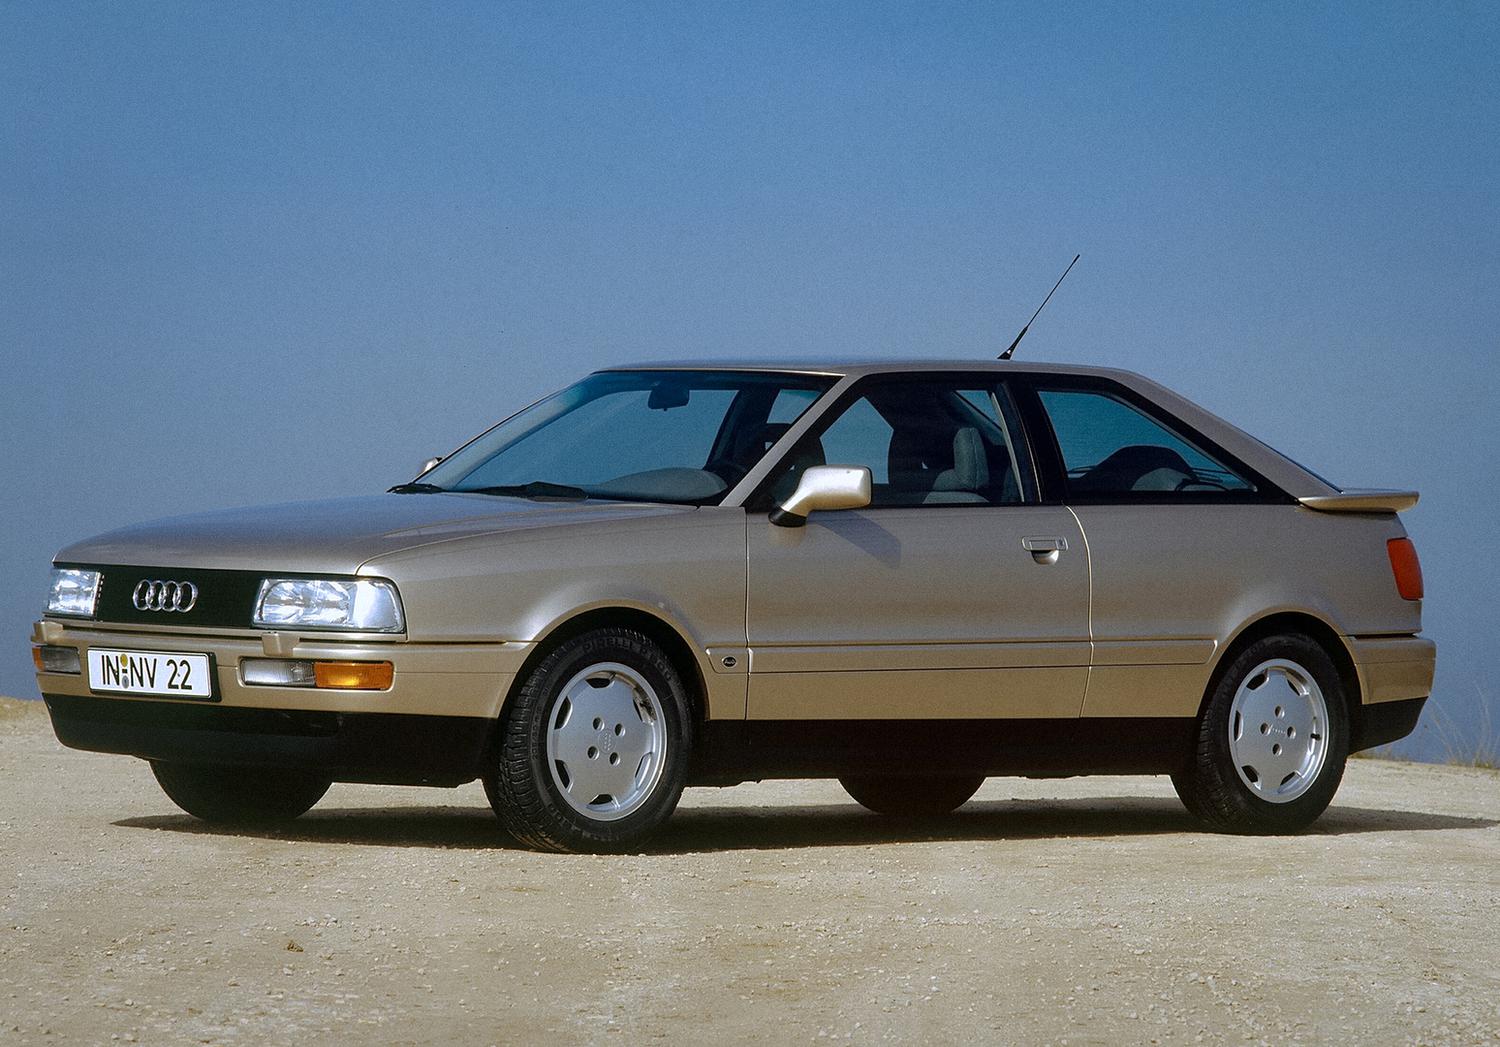   5   Audi 80 - Qutoru